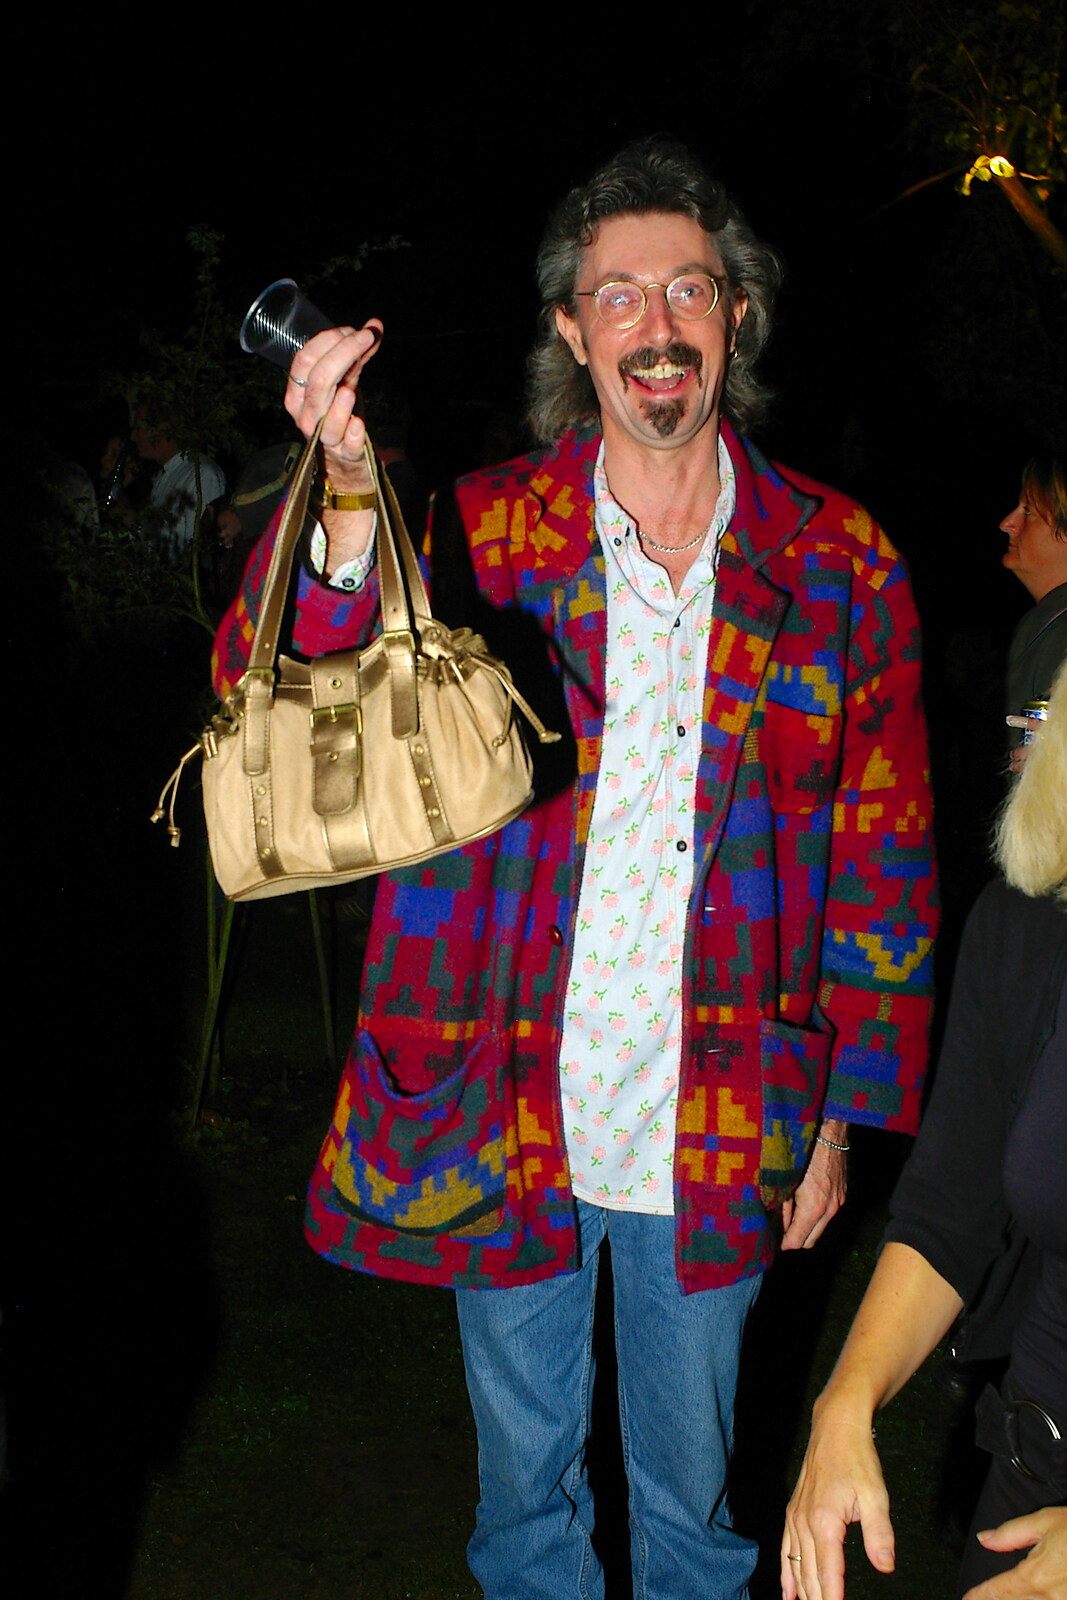 Jo and Steph's Party, Burston, Norfolk - 30th September 2005: Rob models a handbag